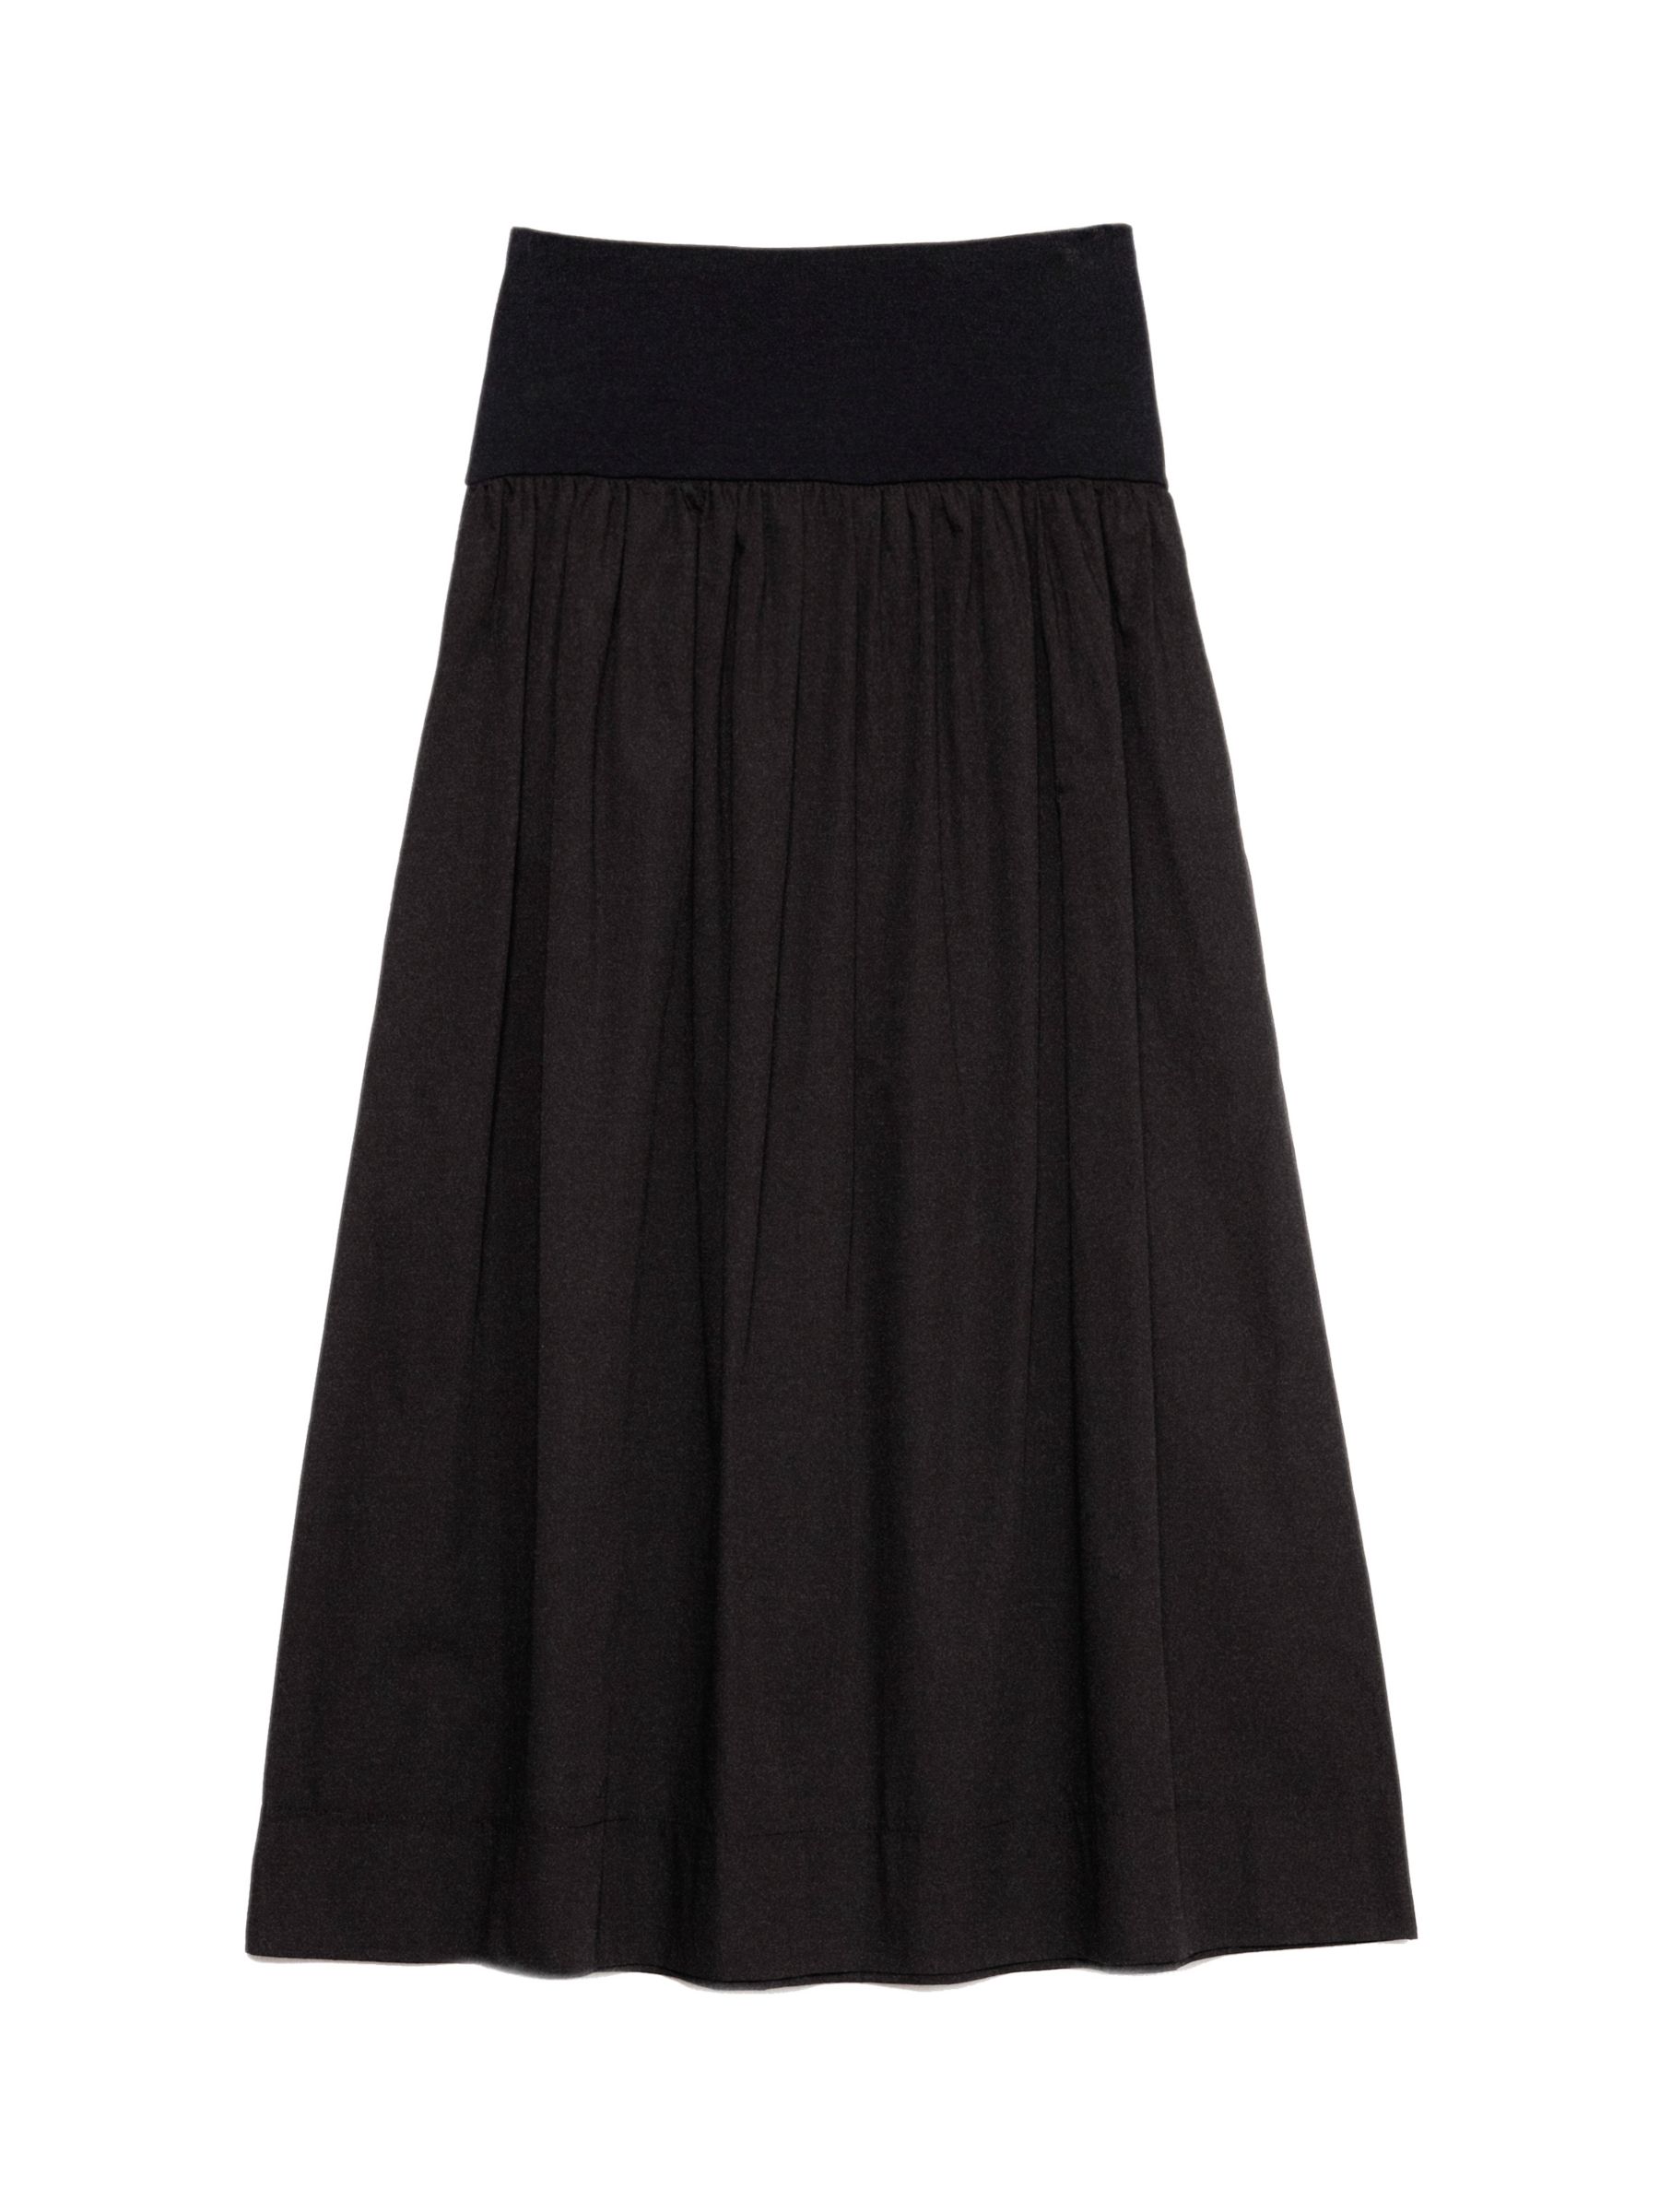 Buy Albaray Cotton Blend Maxi Skirt, Black Online at johnlewis.com